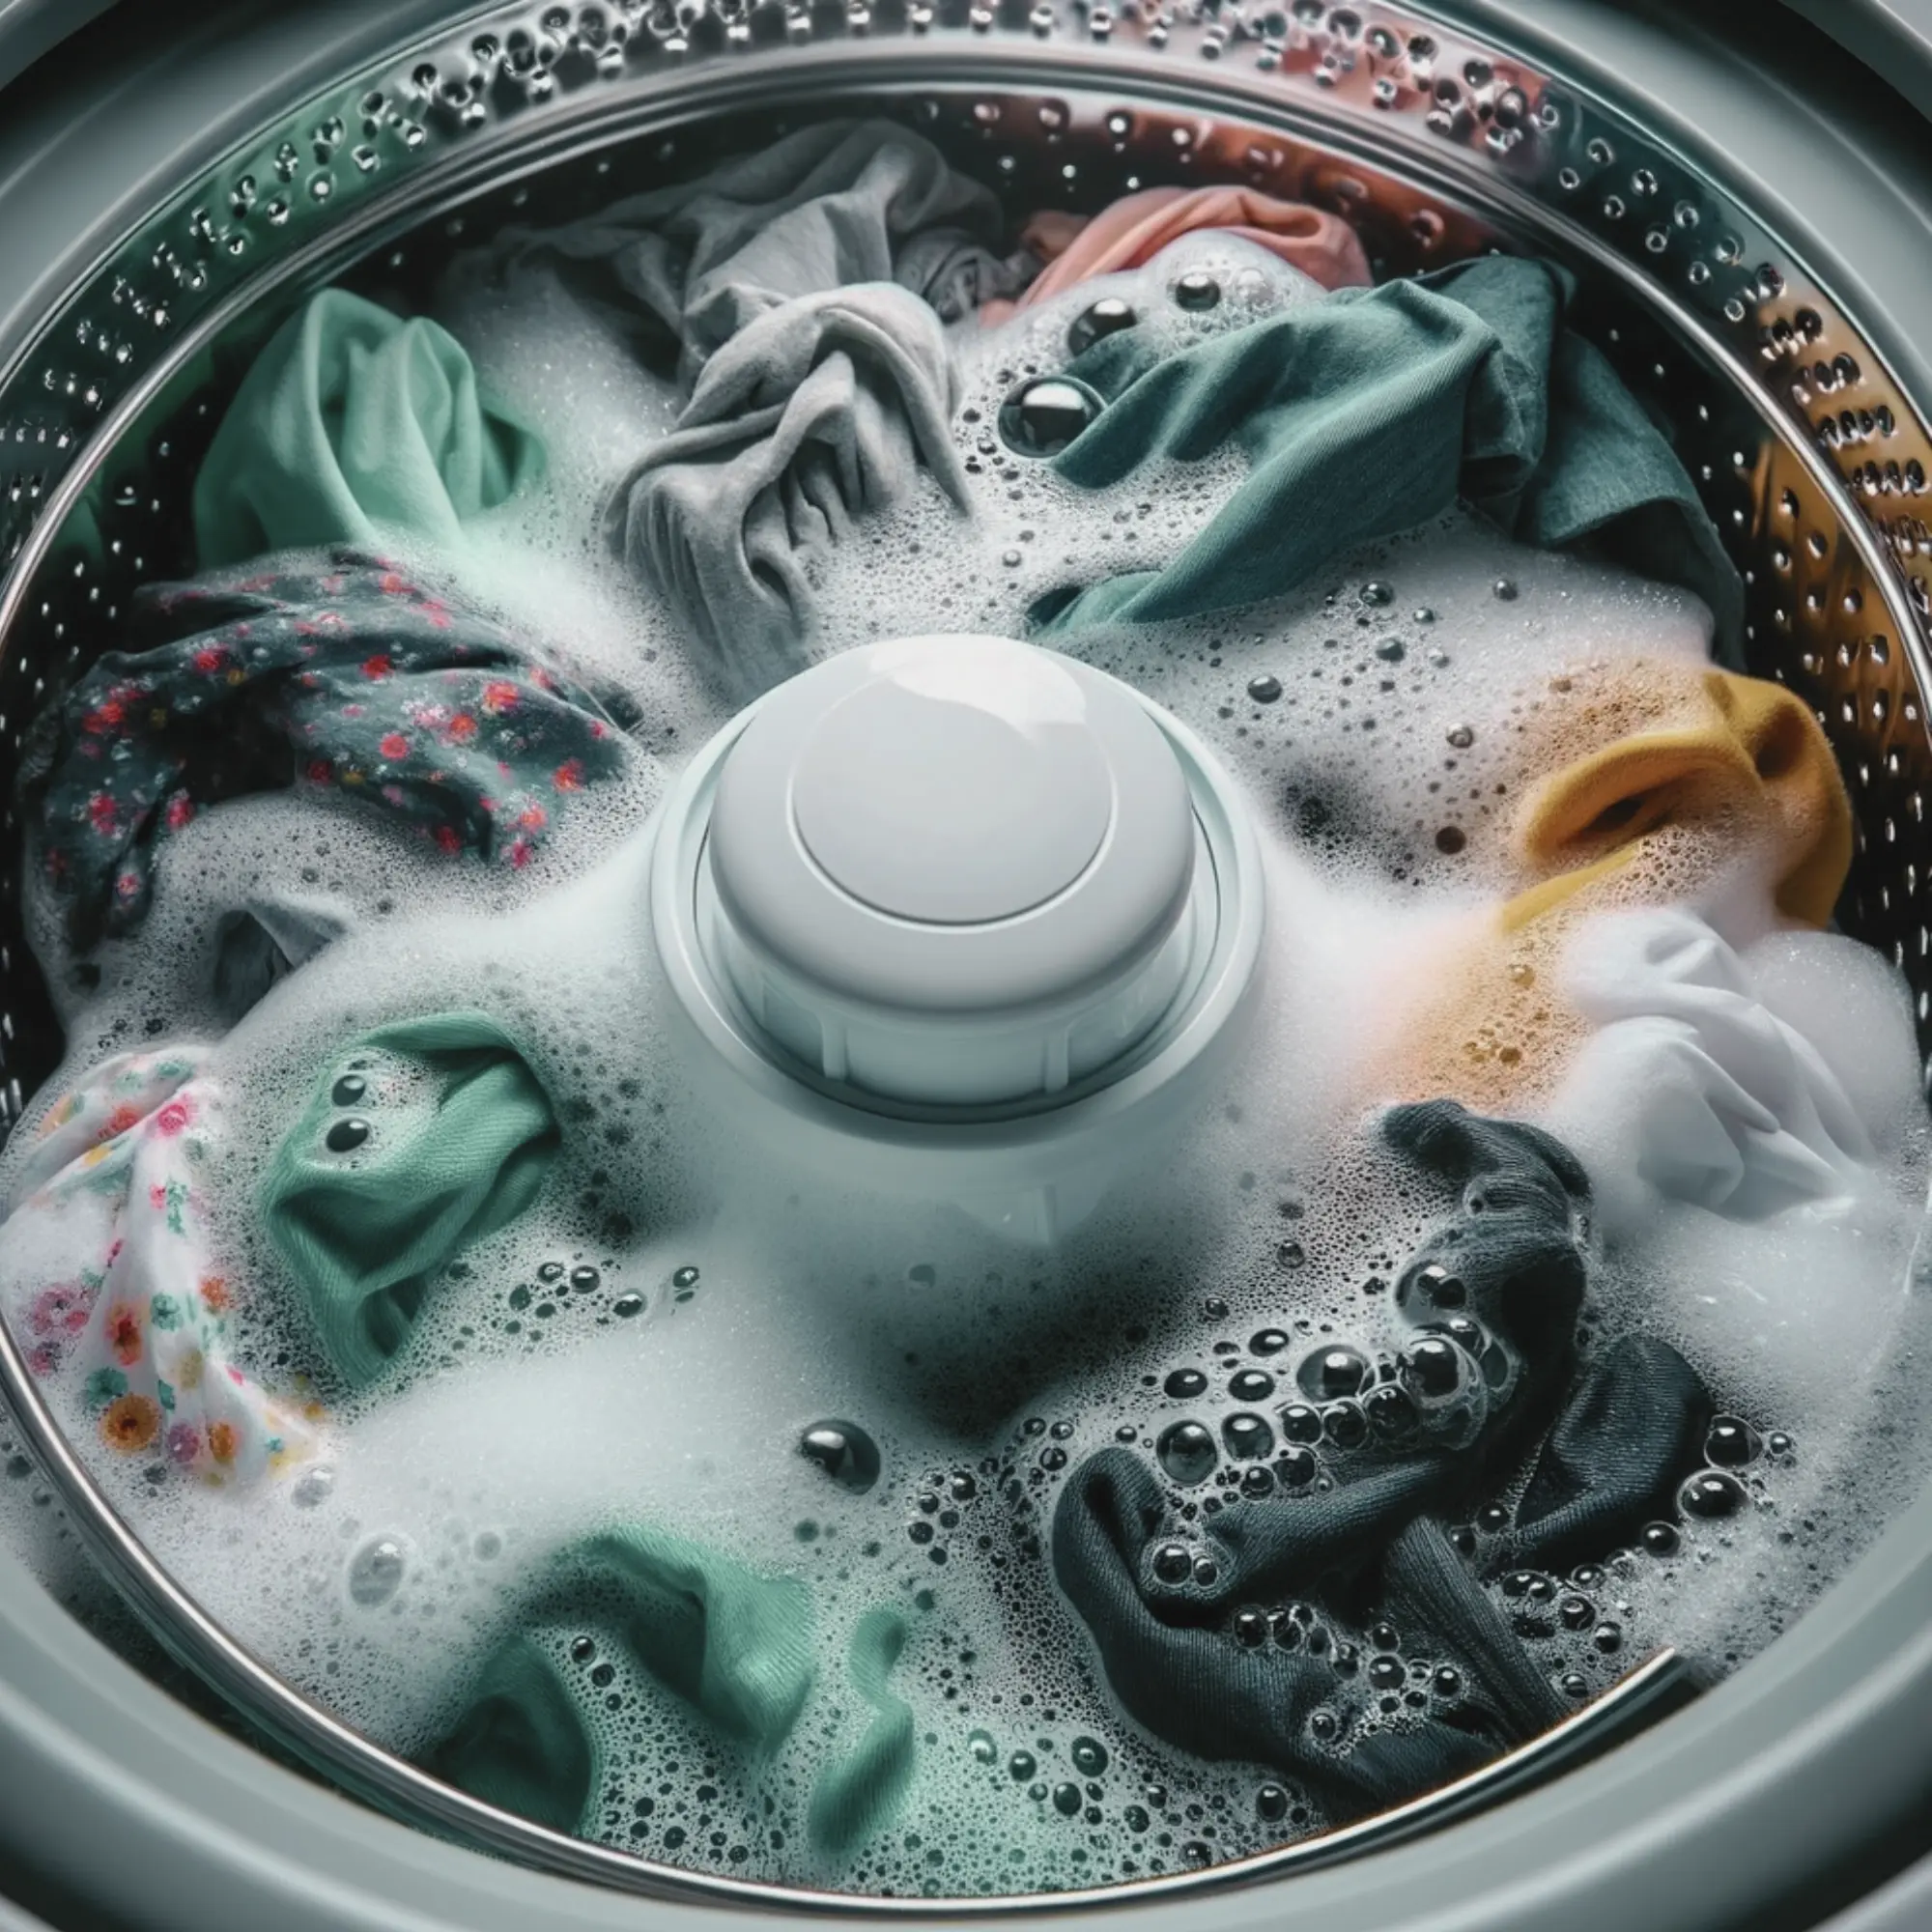 Top-loading washing machine tips and tricks